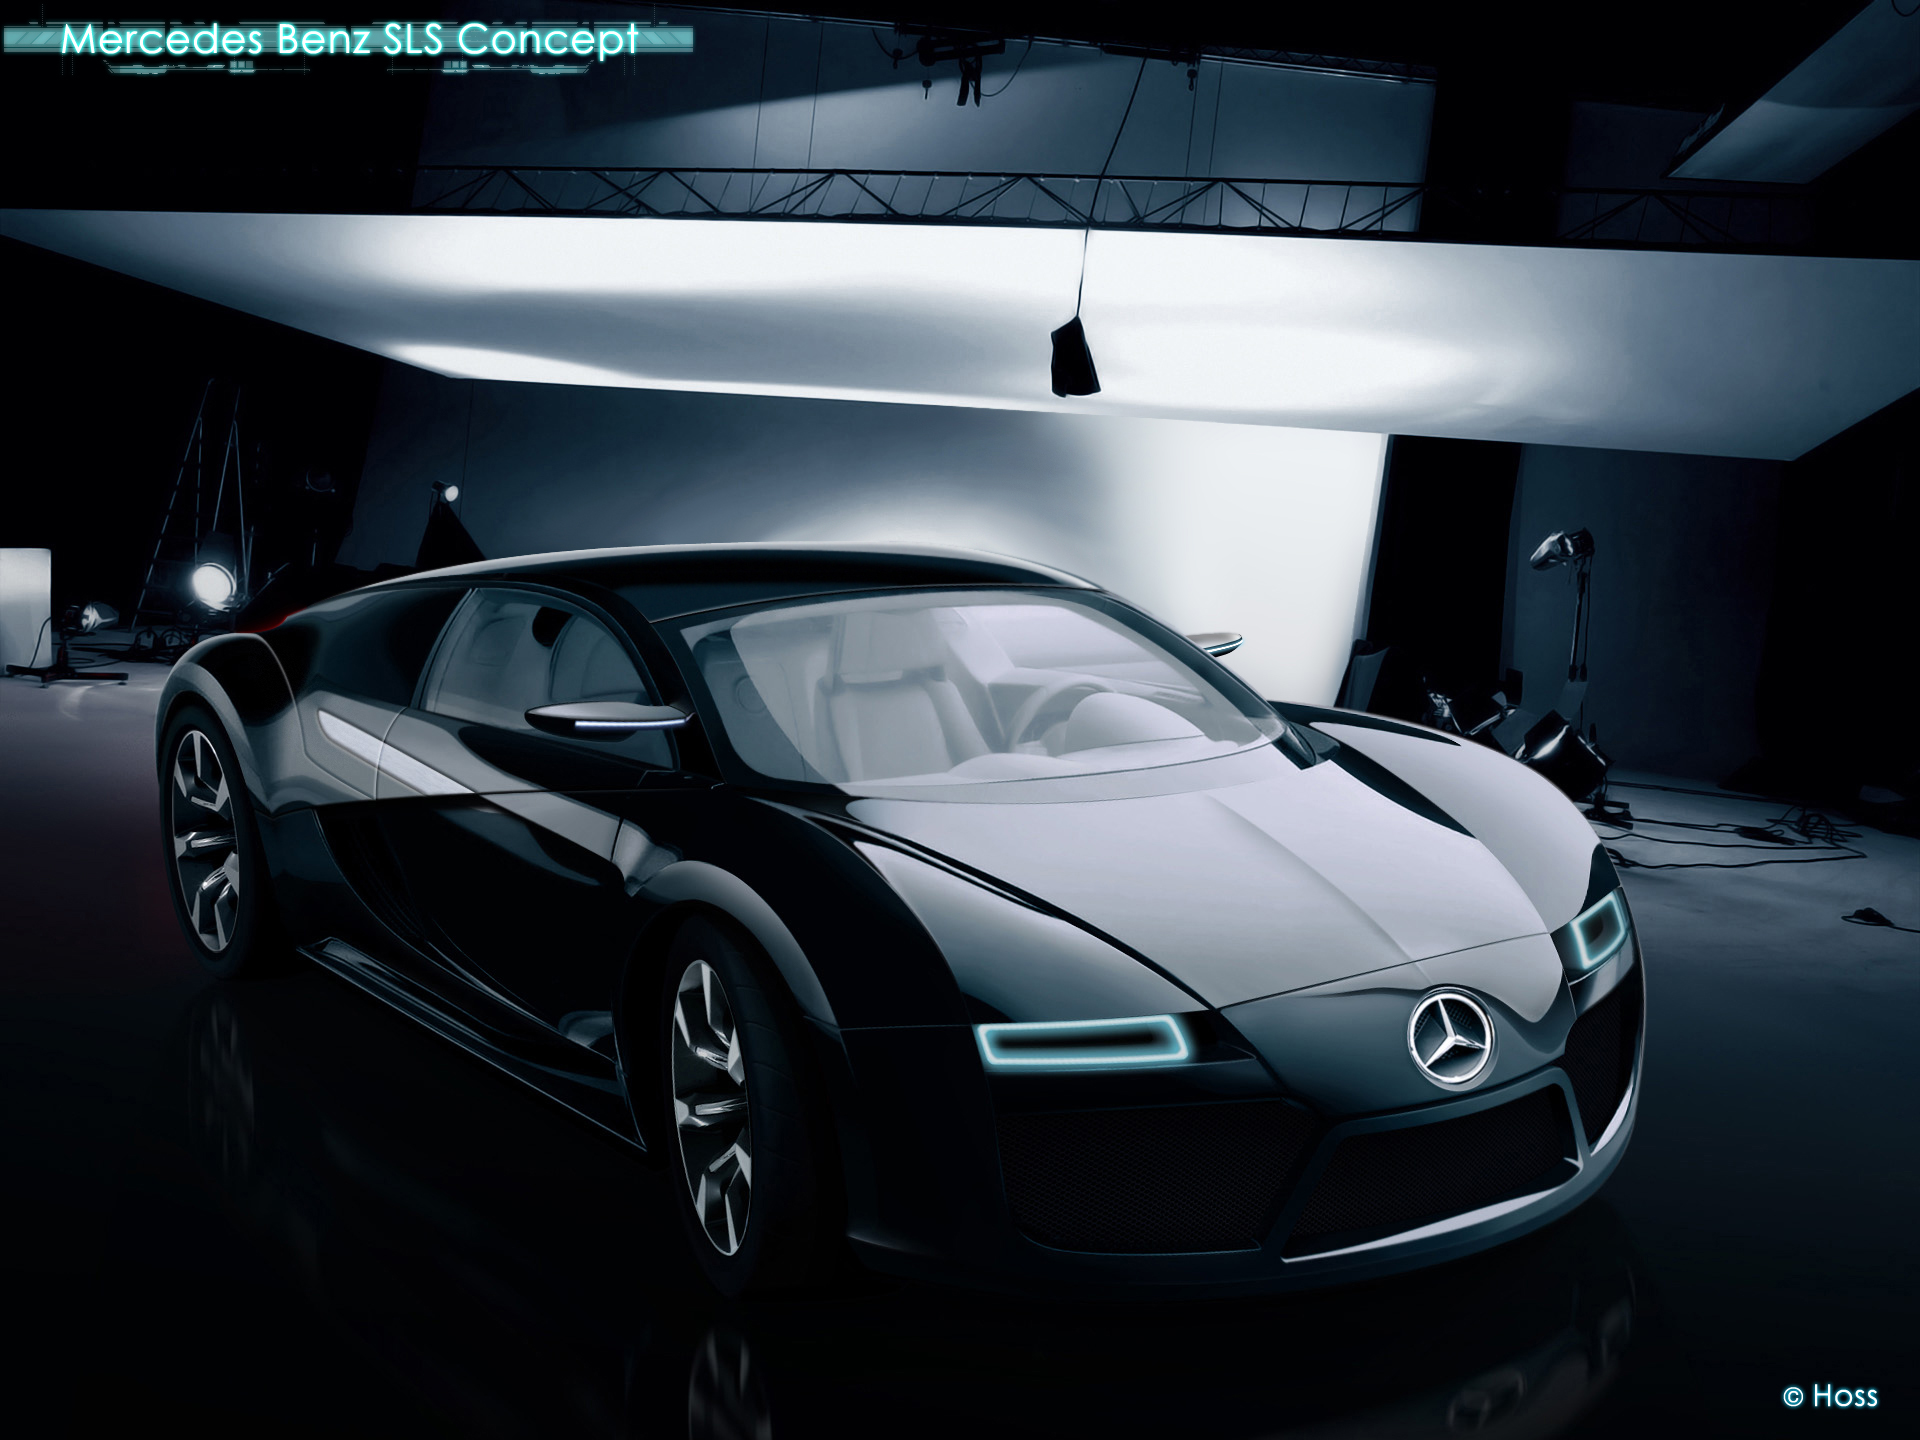 Mercedes_Benz_SLS_Concept_by_Hossworks.jpg